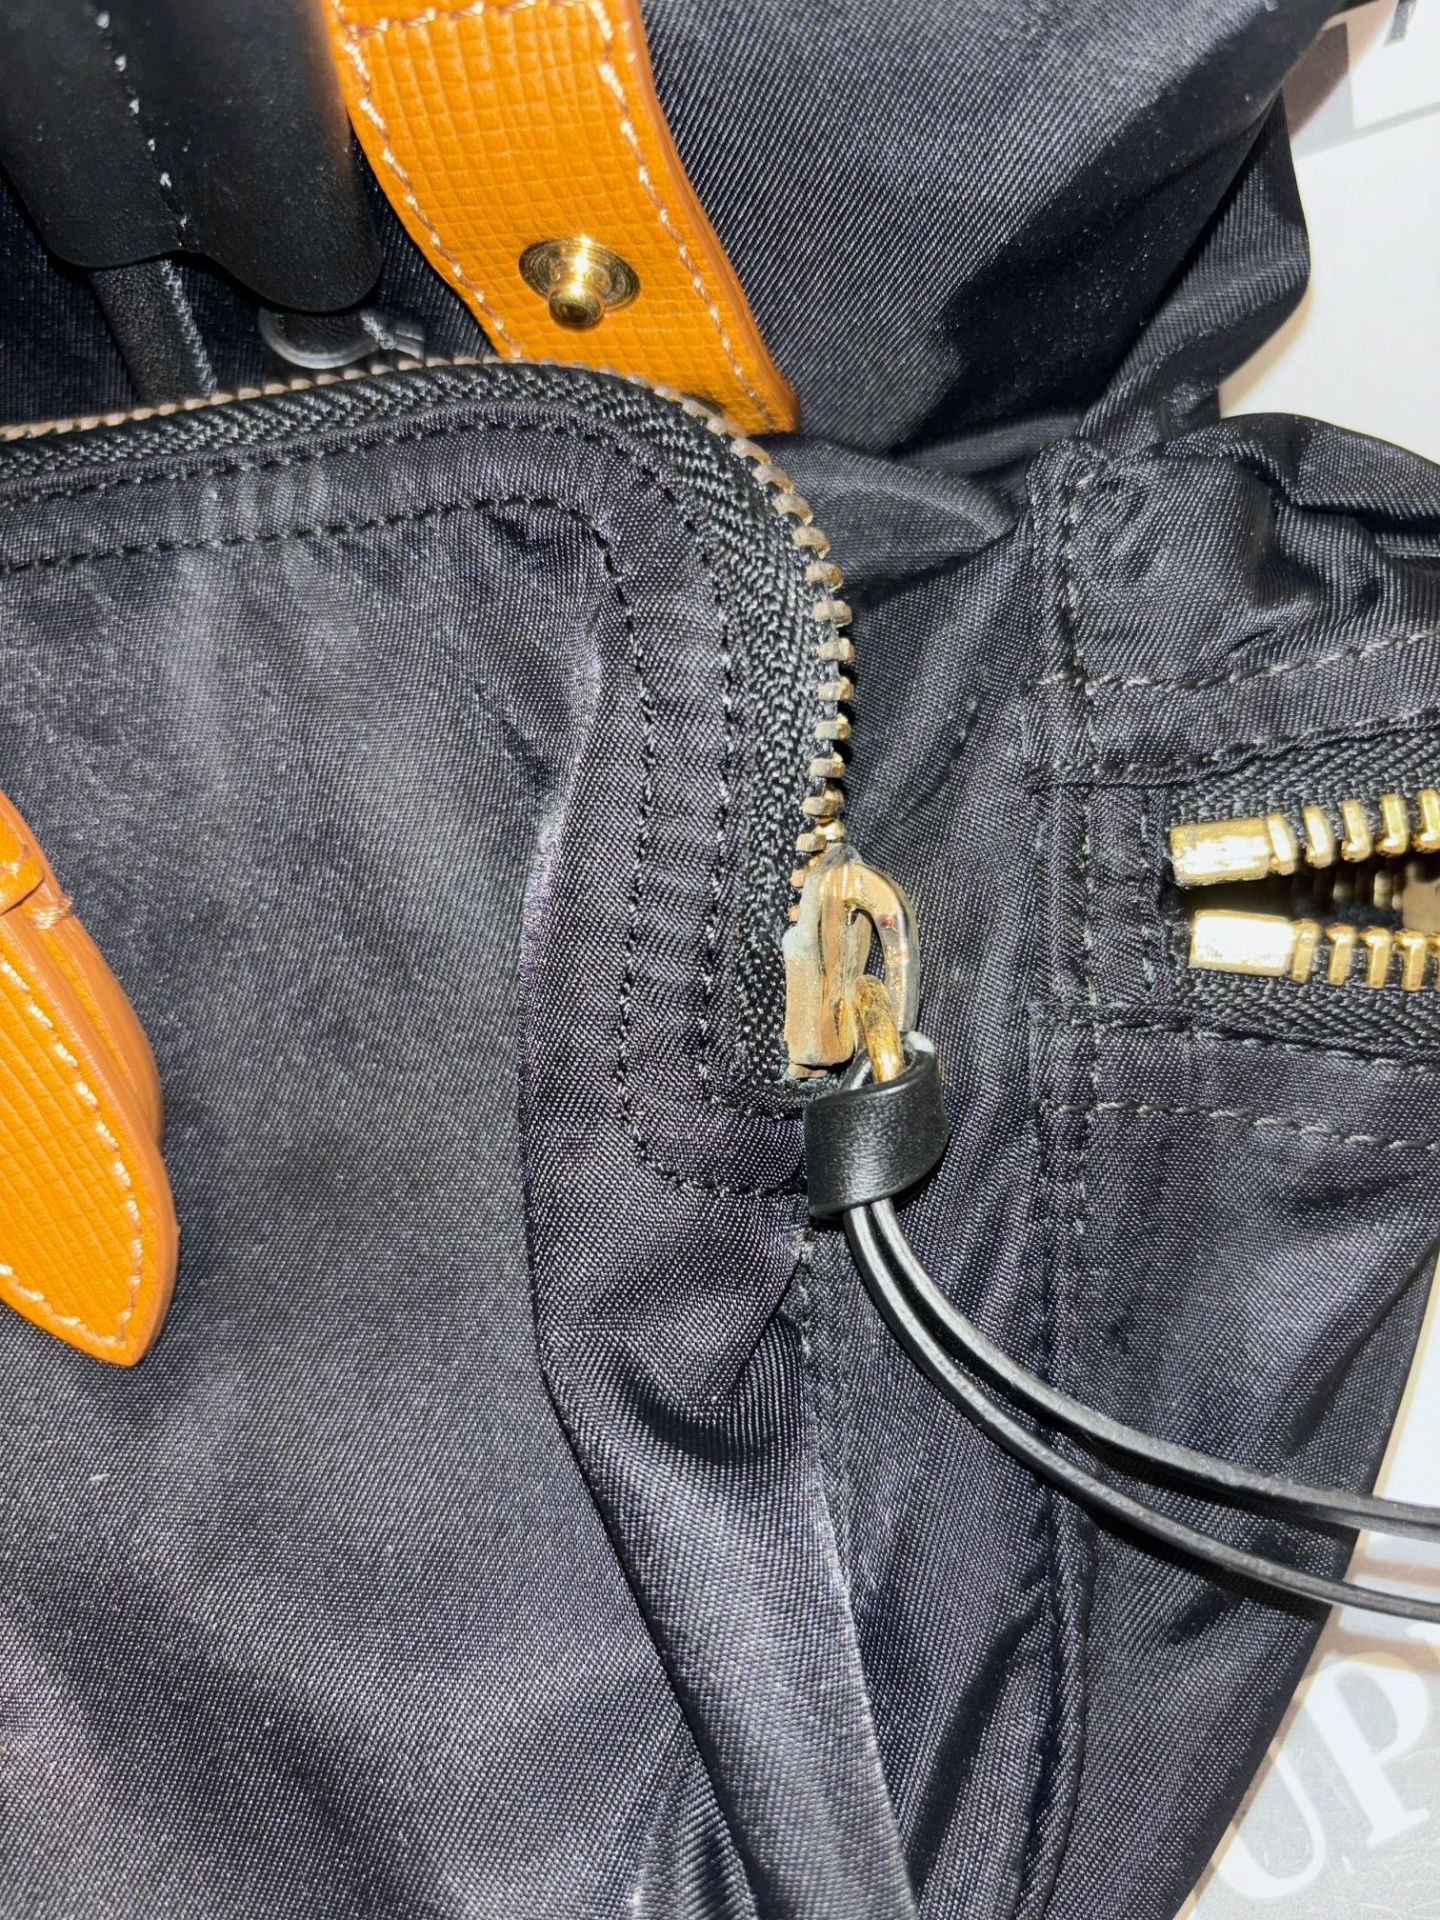 Burberry black nylon backpack. 35x35cm - Image 6 of 13